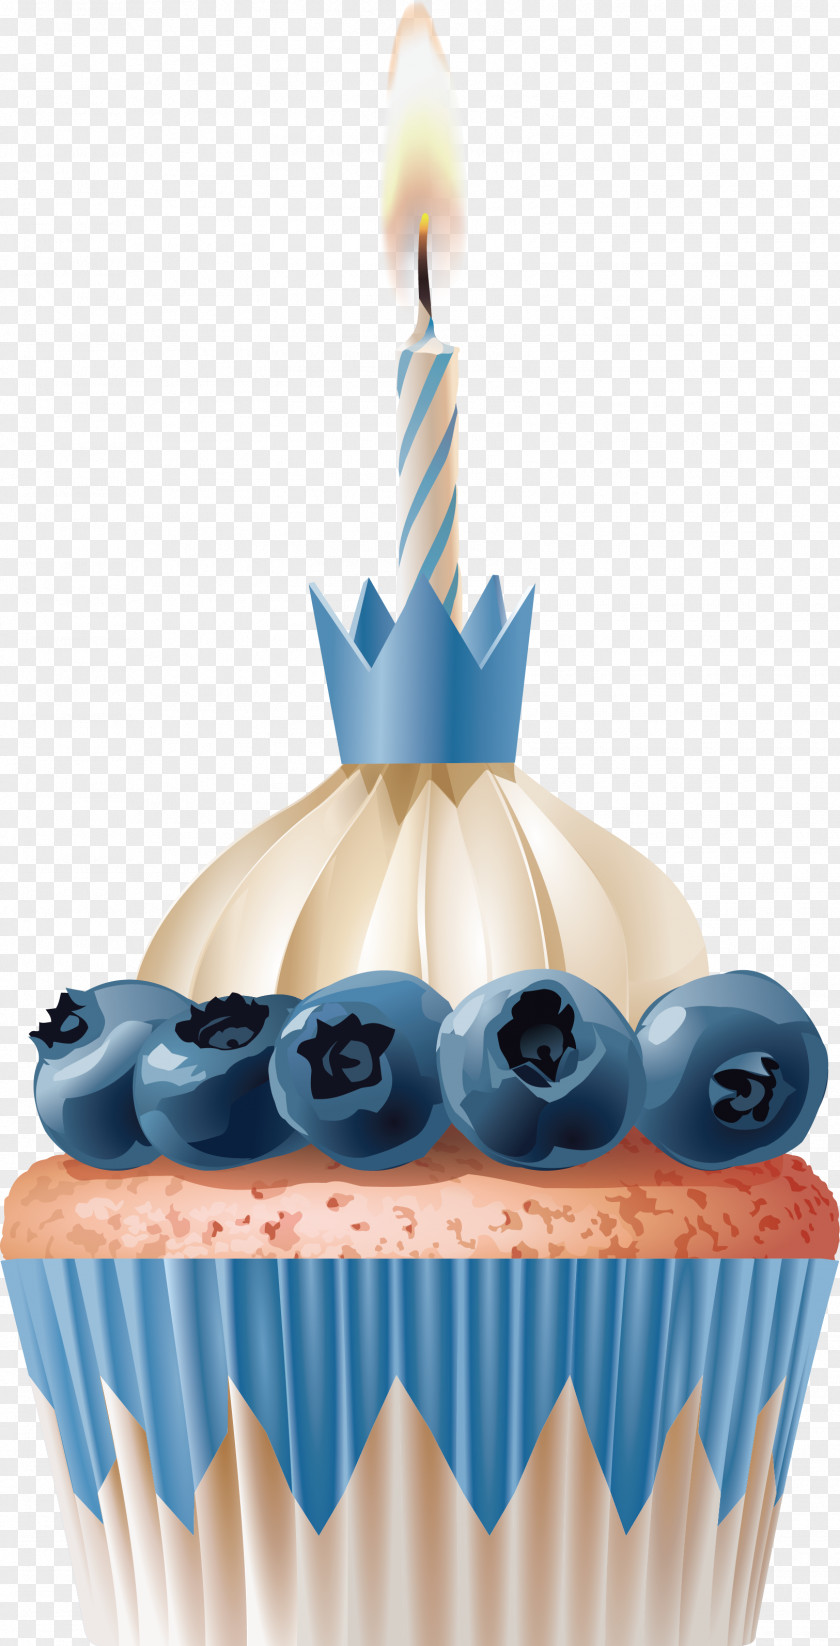 Blueberry Cupcakes Cupcake Birthday Cake Bakery Muffin Madeleine PNG